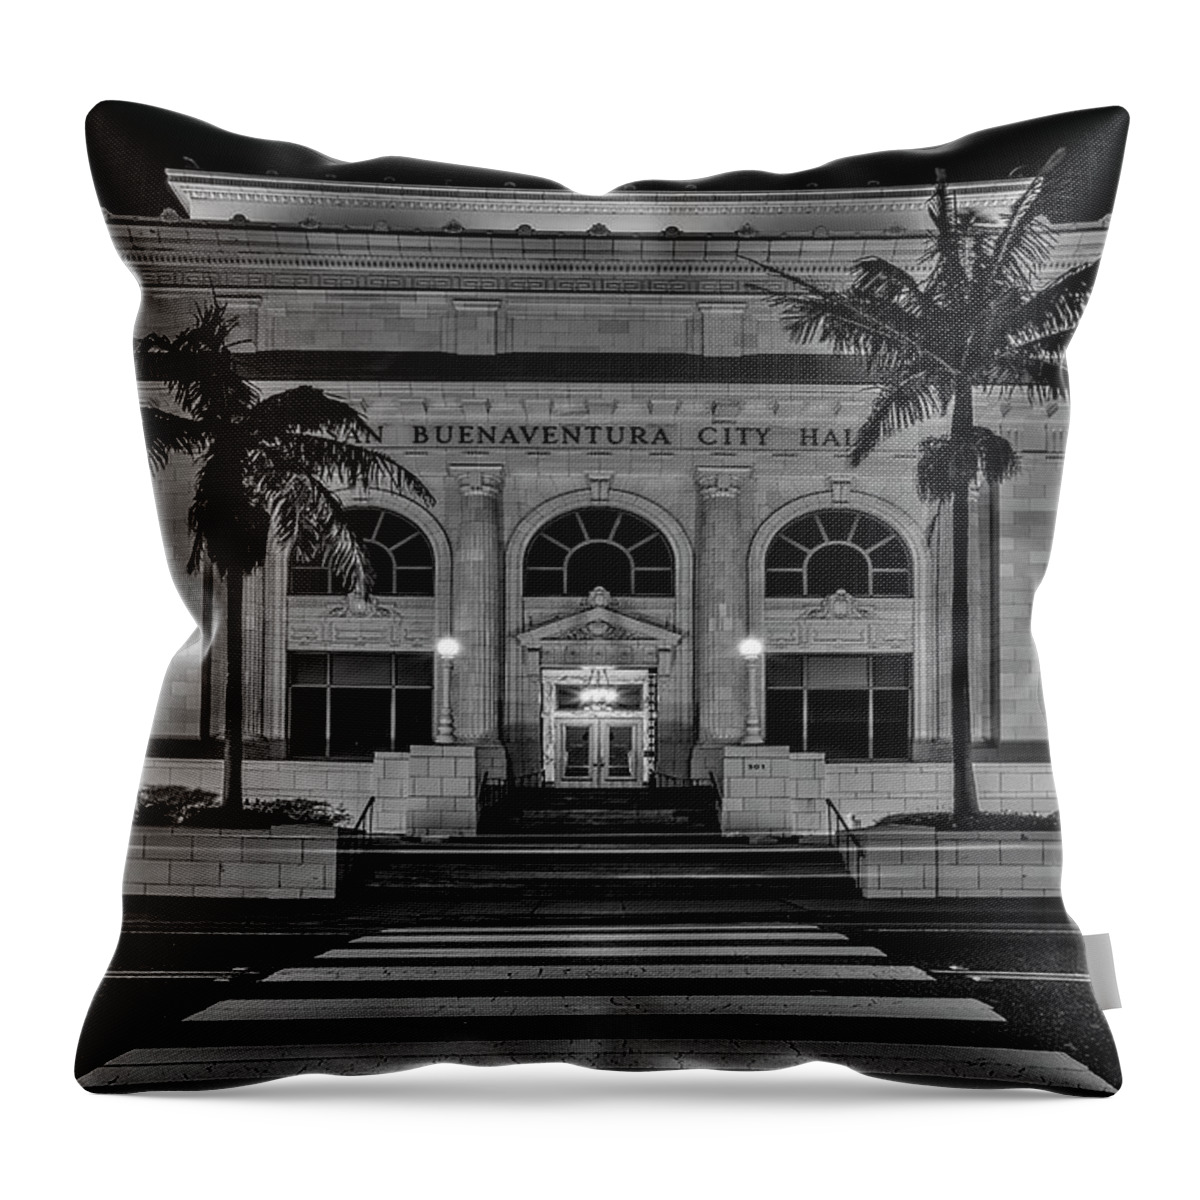 San Buenaventura City Hall Throw Pillow featuring the photograph San Buenaventura City Hall CA BW by Susan Candelario